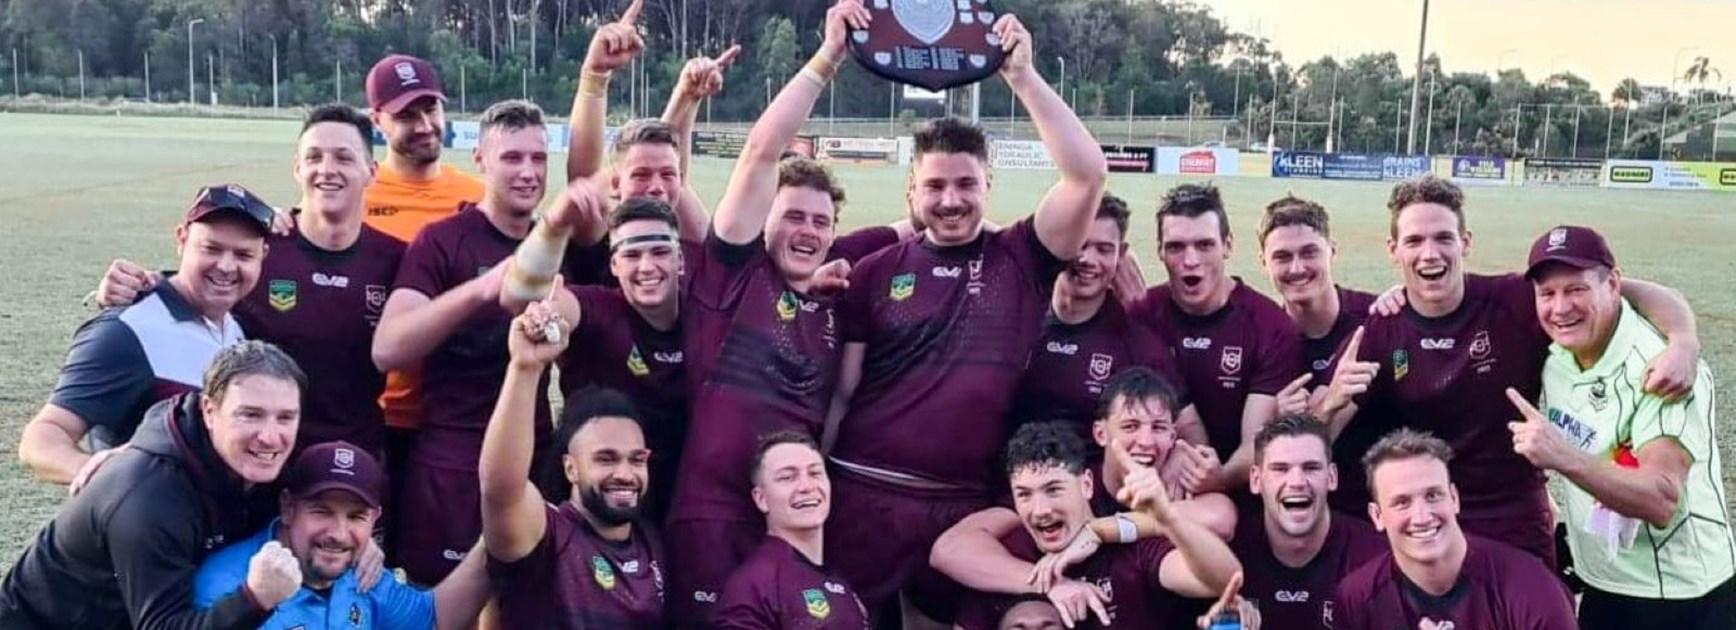 Australian Universities Rugby League team named